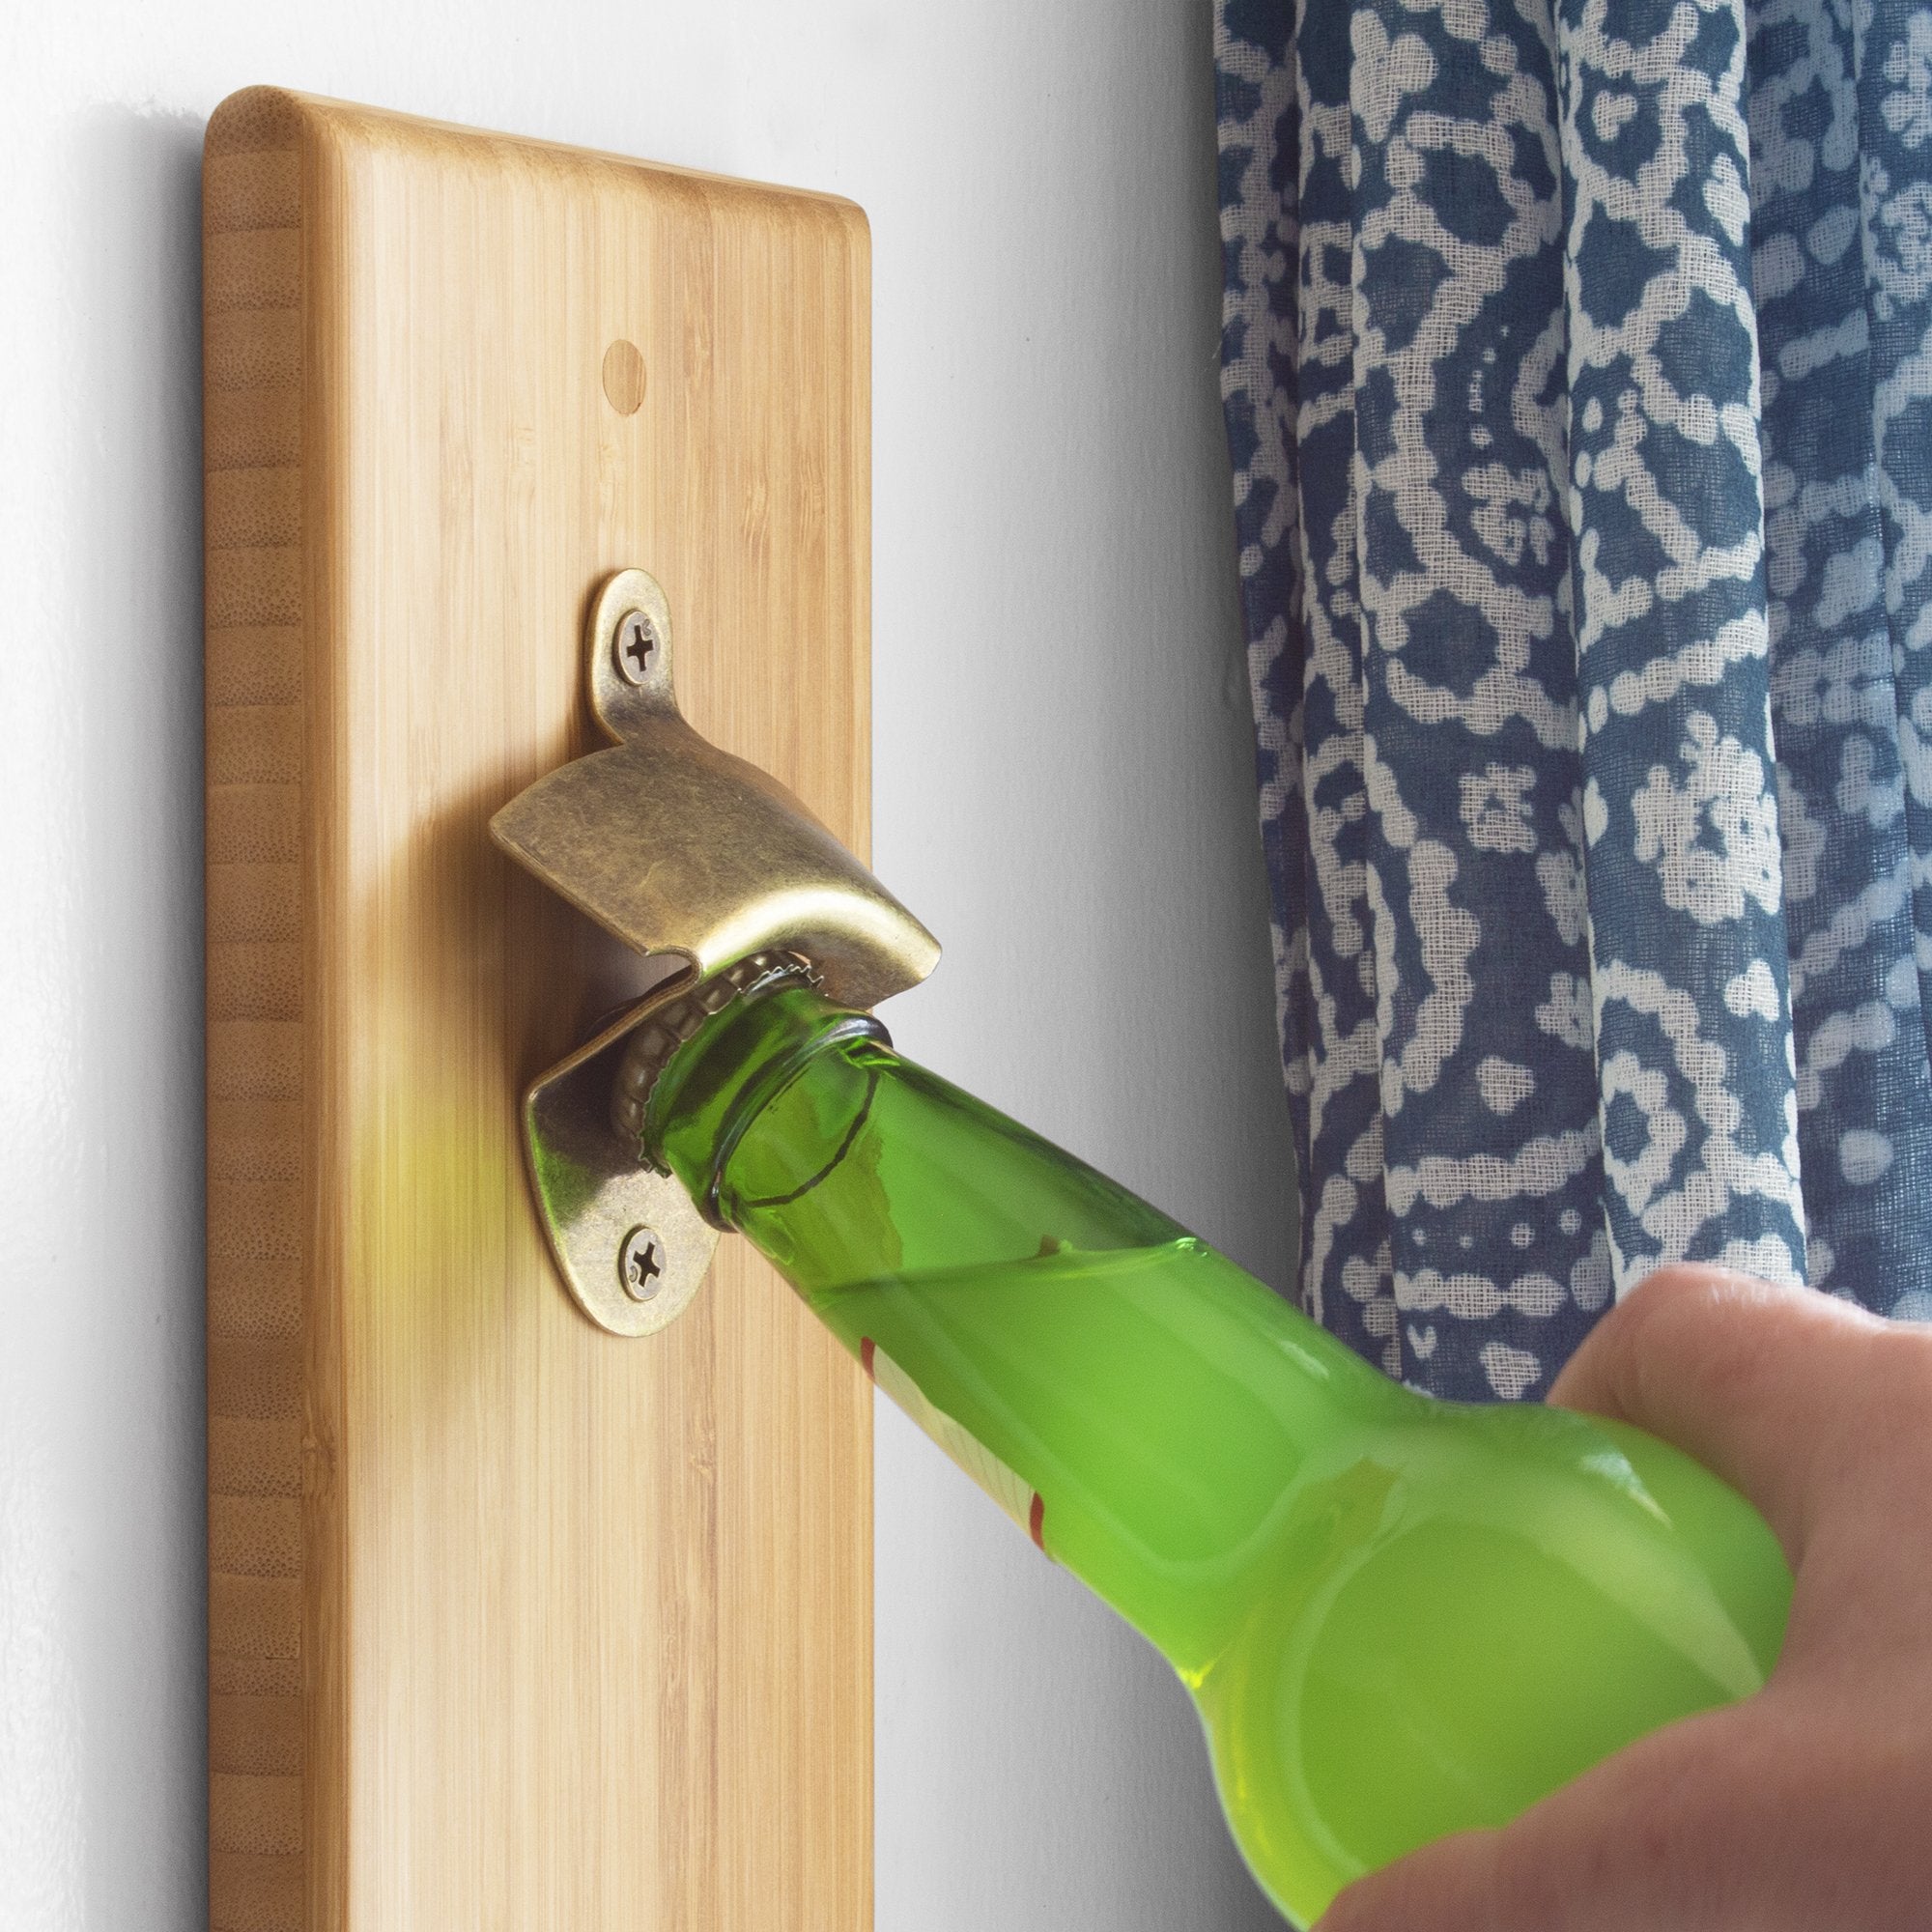 Make a Wall-Mounted Bottle Opener